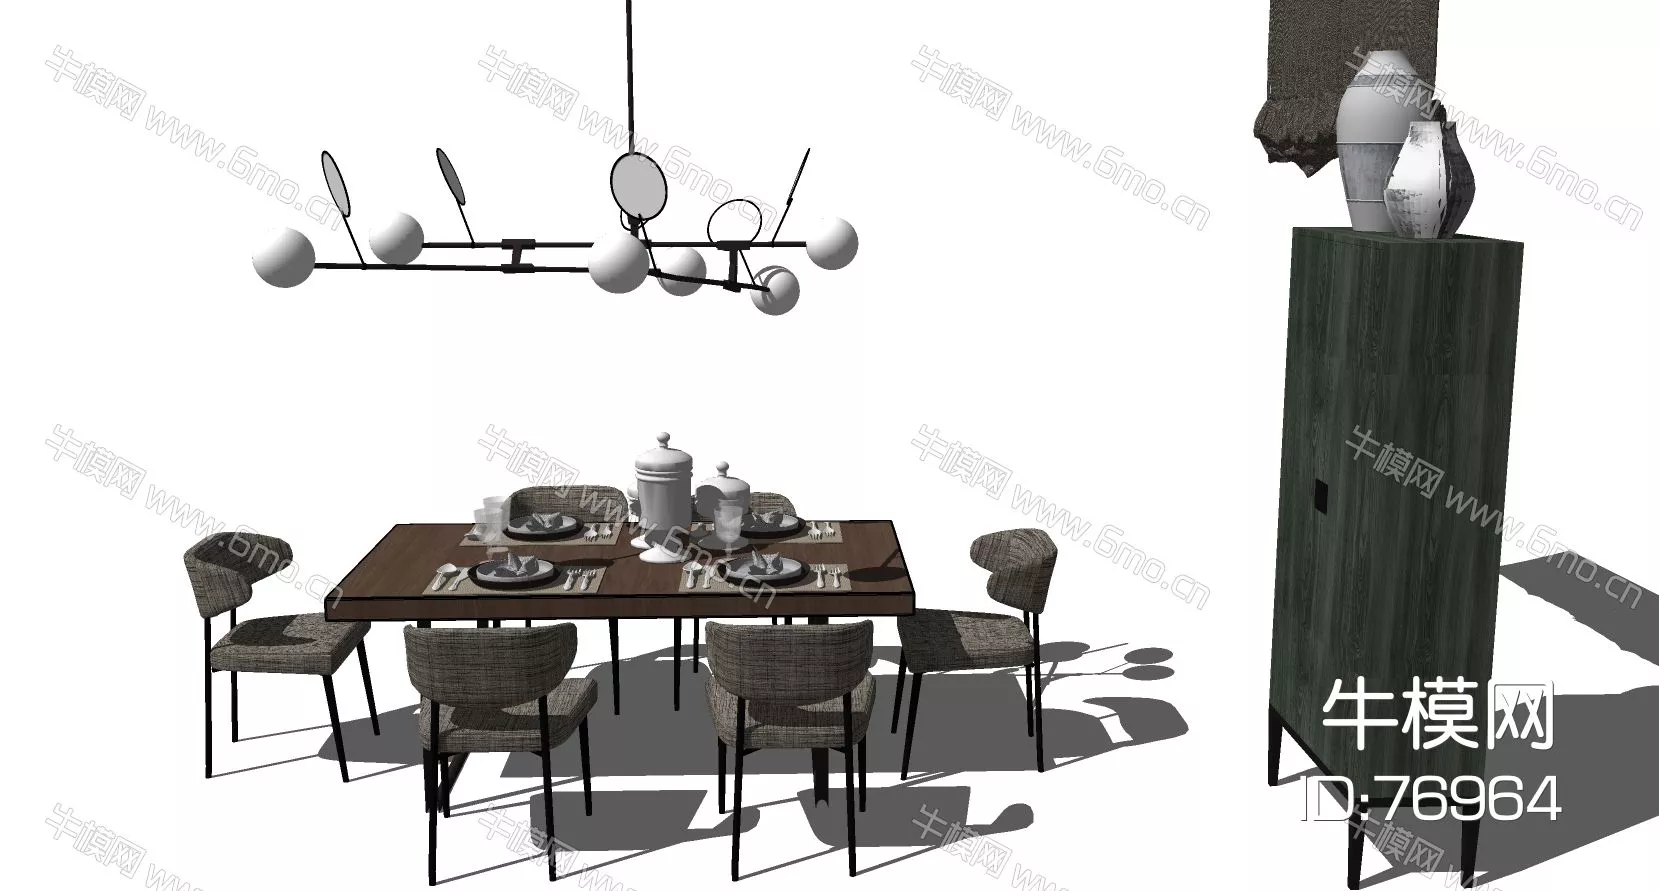 NORDIC DINING TABLE SET - SKETCHUP 3D MODEL - ENSCAPE - 76964